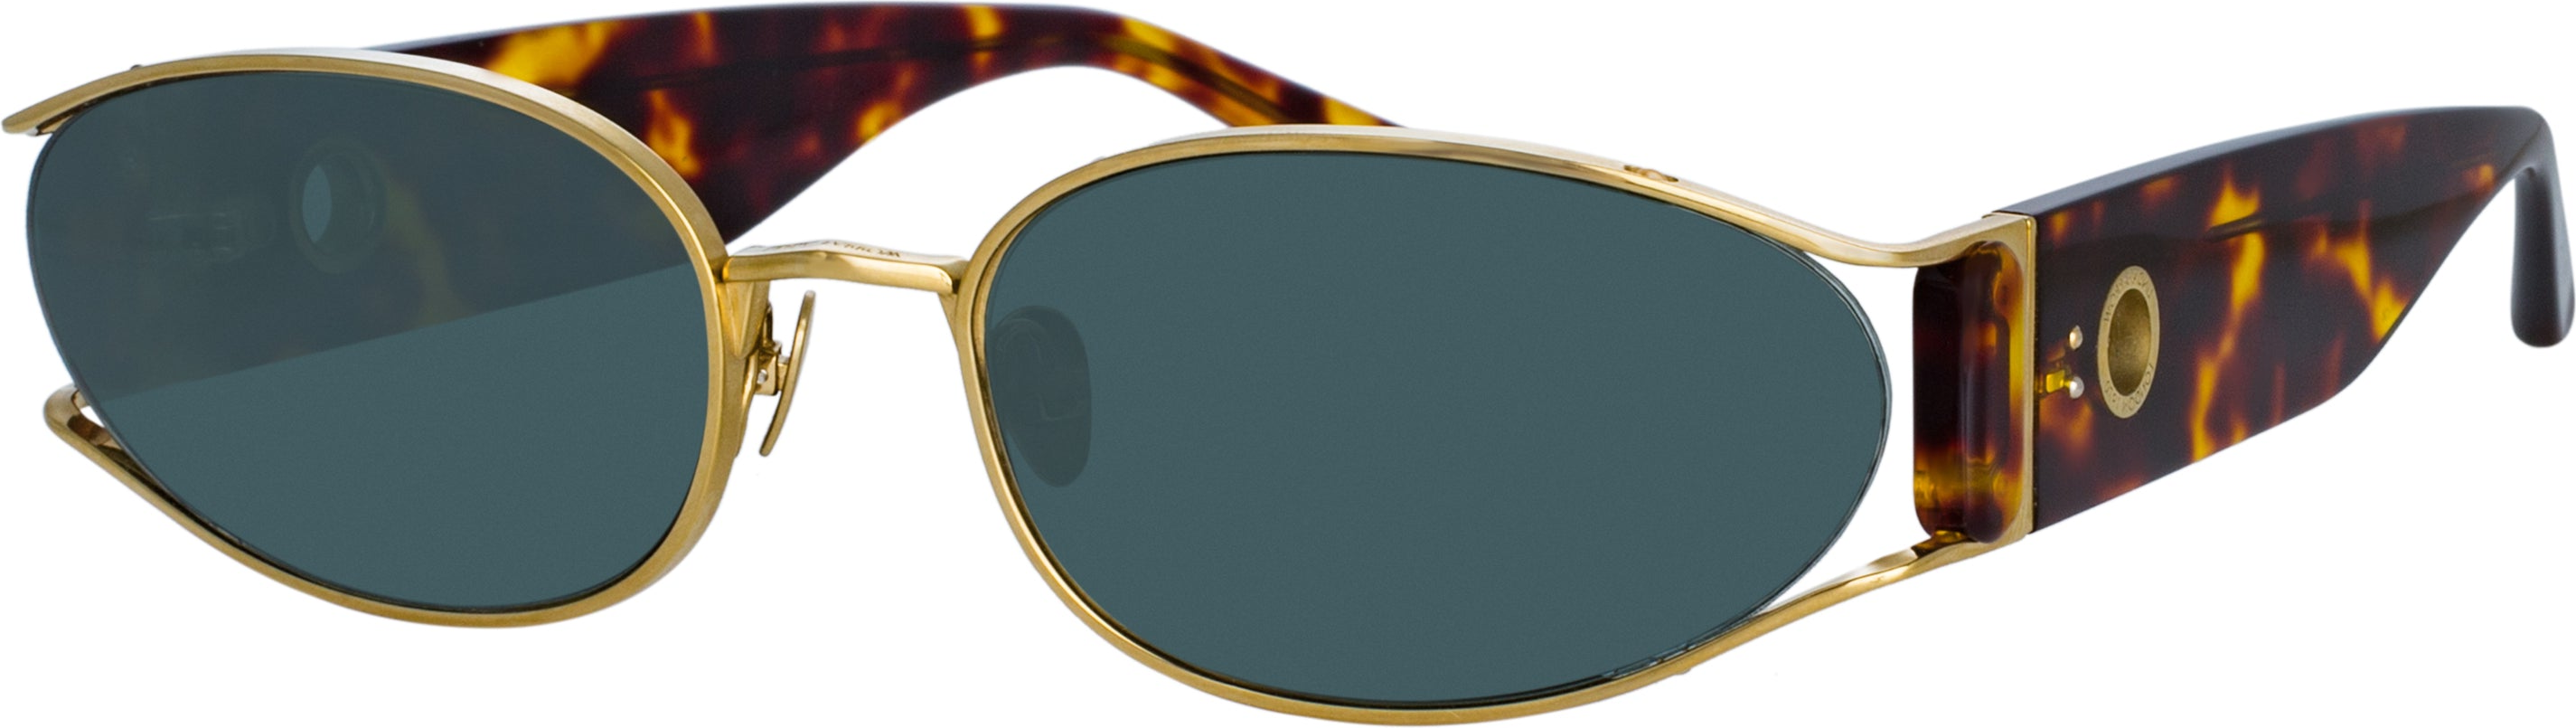 Color_LFL1157C2SUN - Shelby Cat Eye Sunglasses in Tortoiseshell